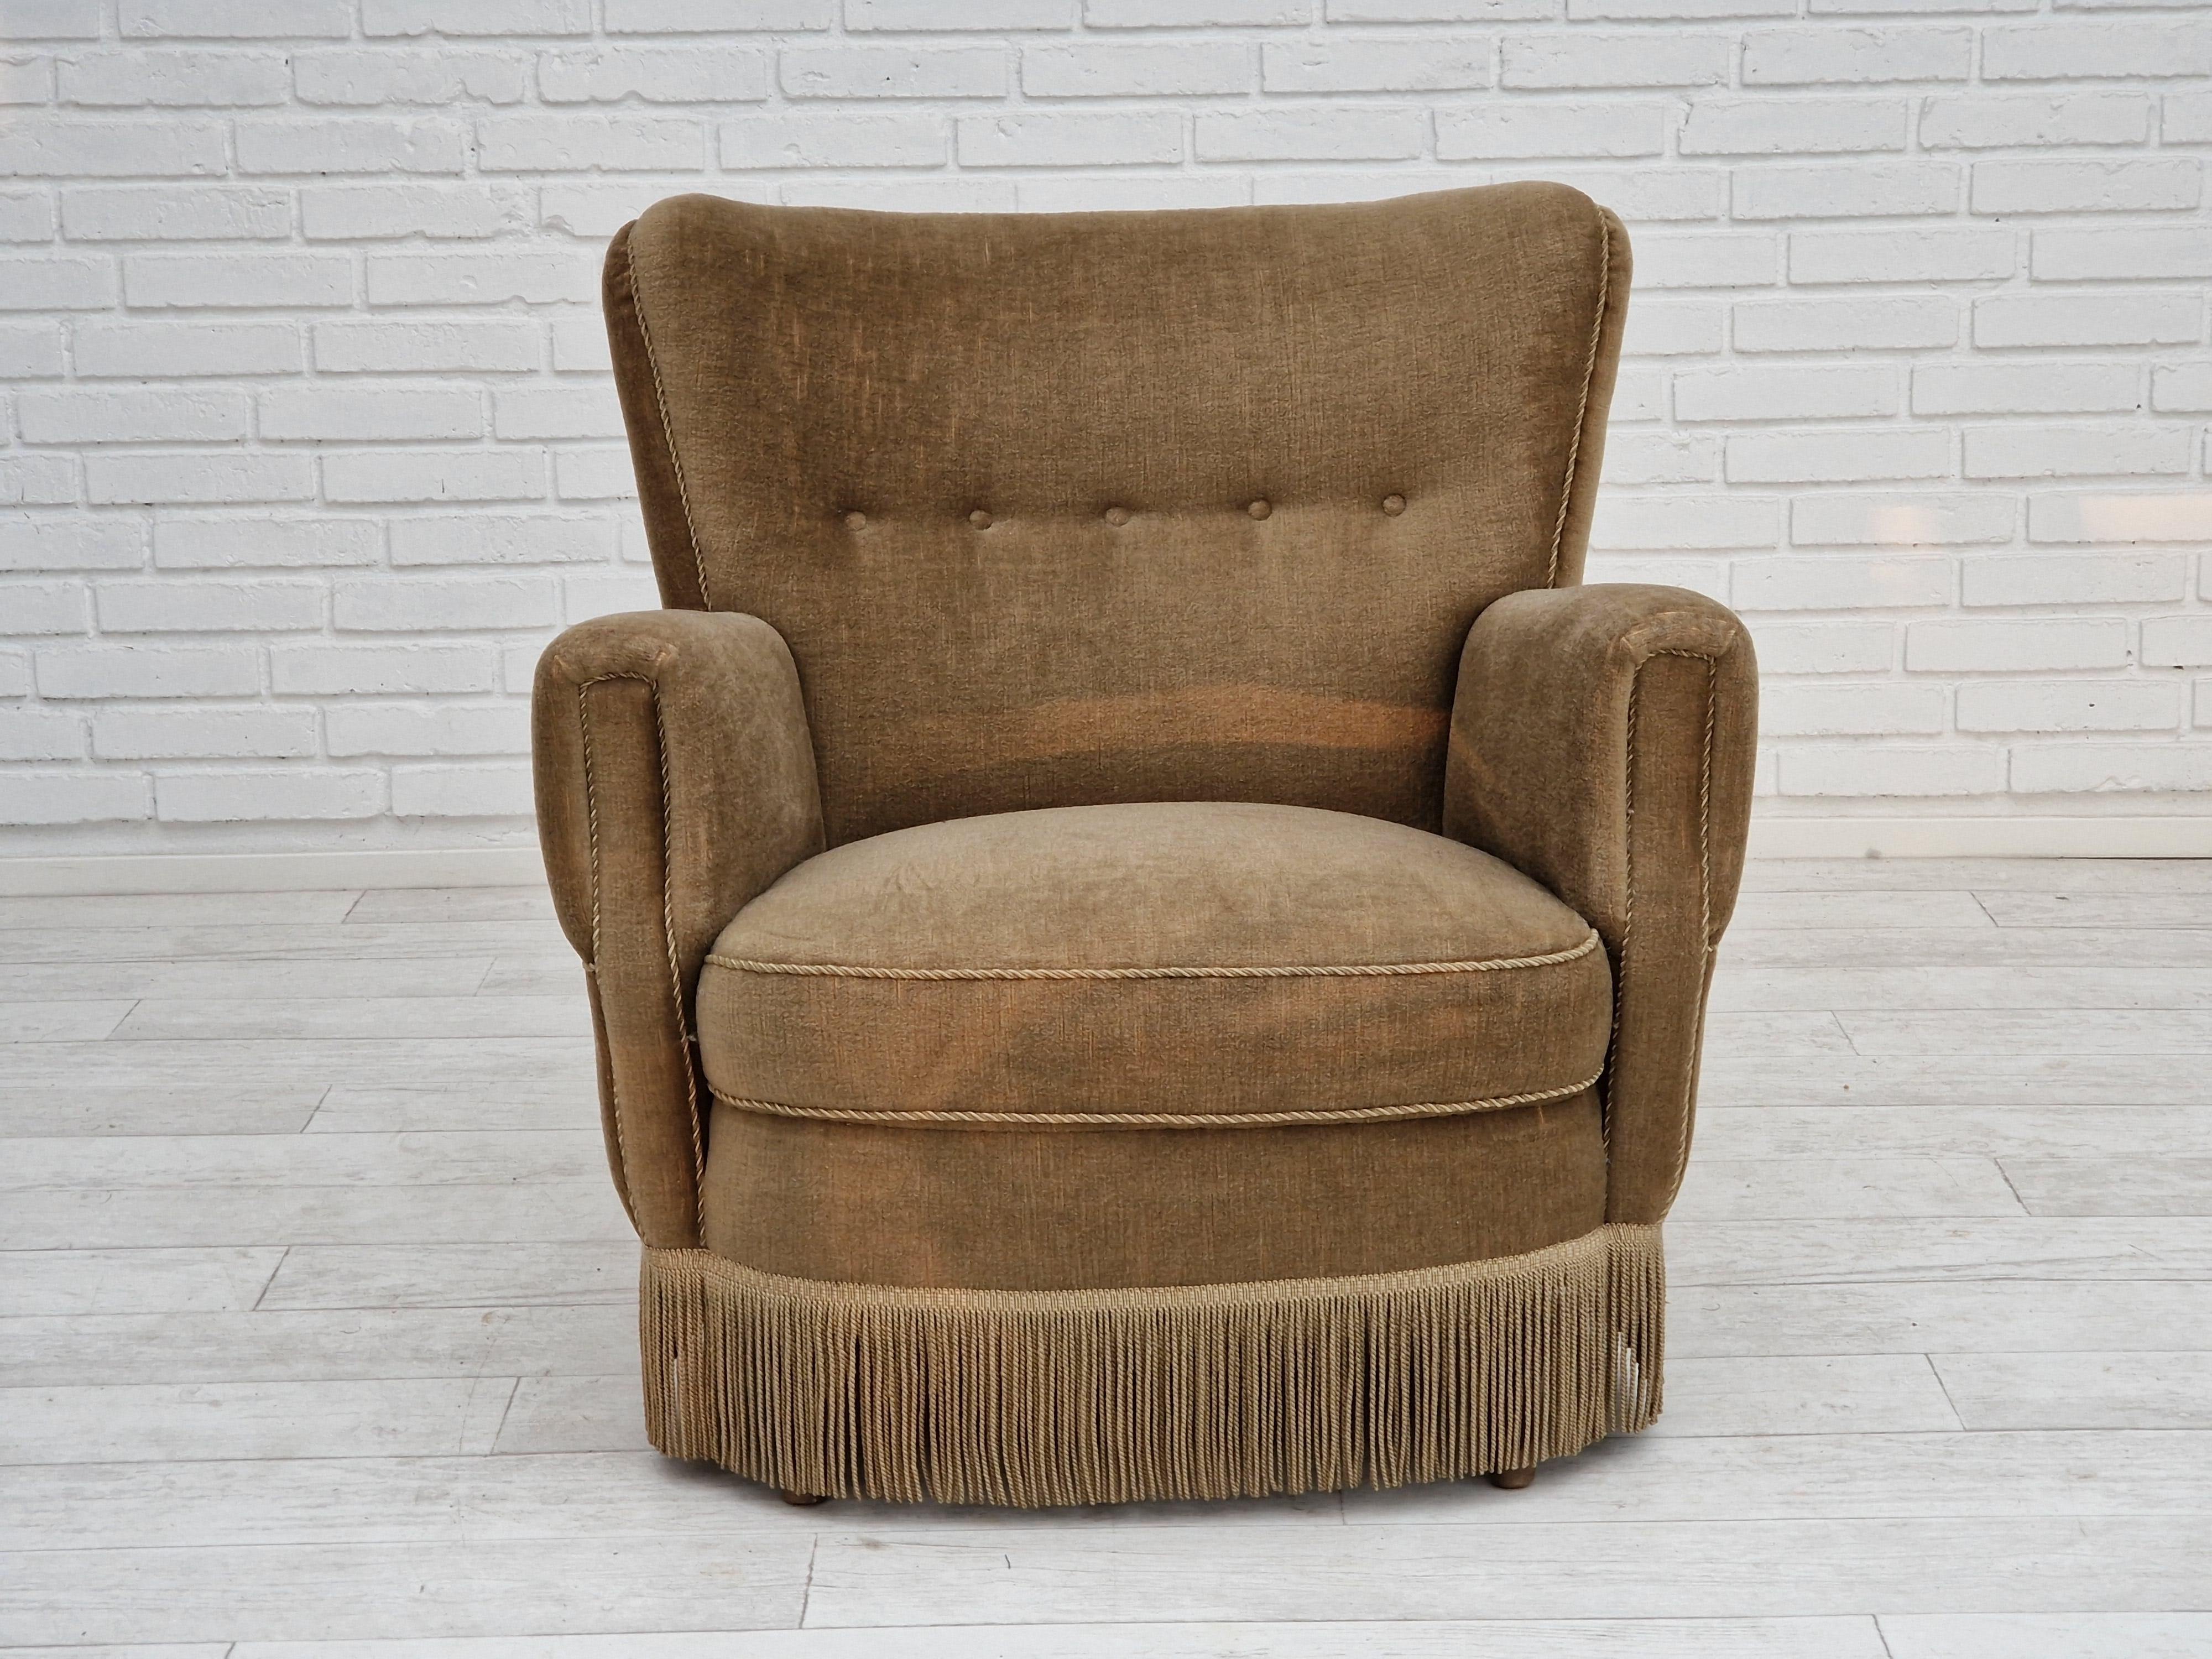 Velvet 1970s, Danish velour chair, original condition, beech wood.